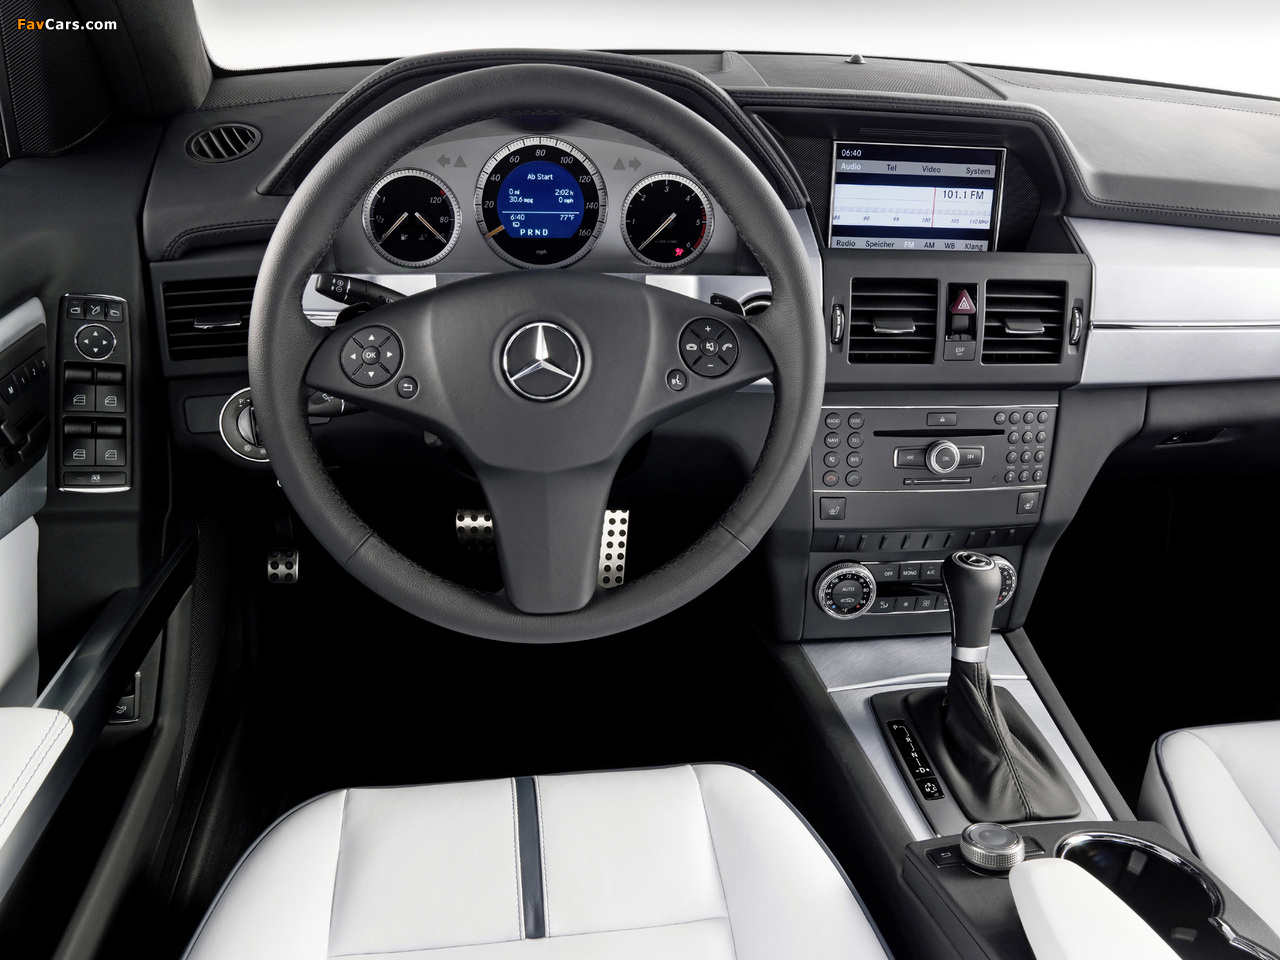 Mercedes-Benz Vision GLK Townside Concept (X204) 2008 images (1280 x 960)